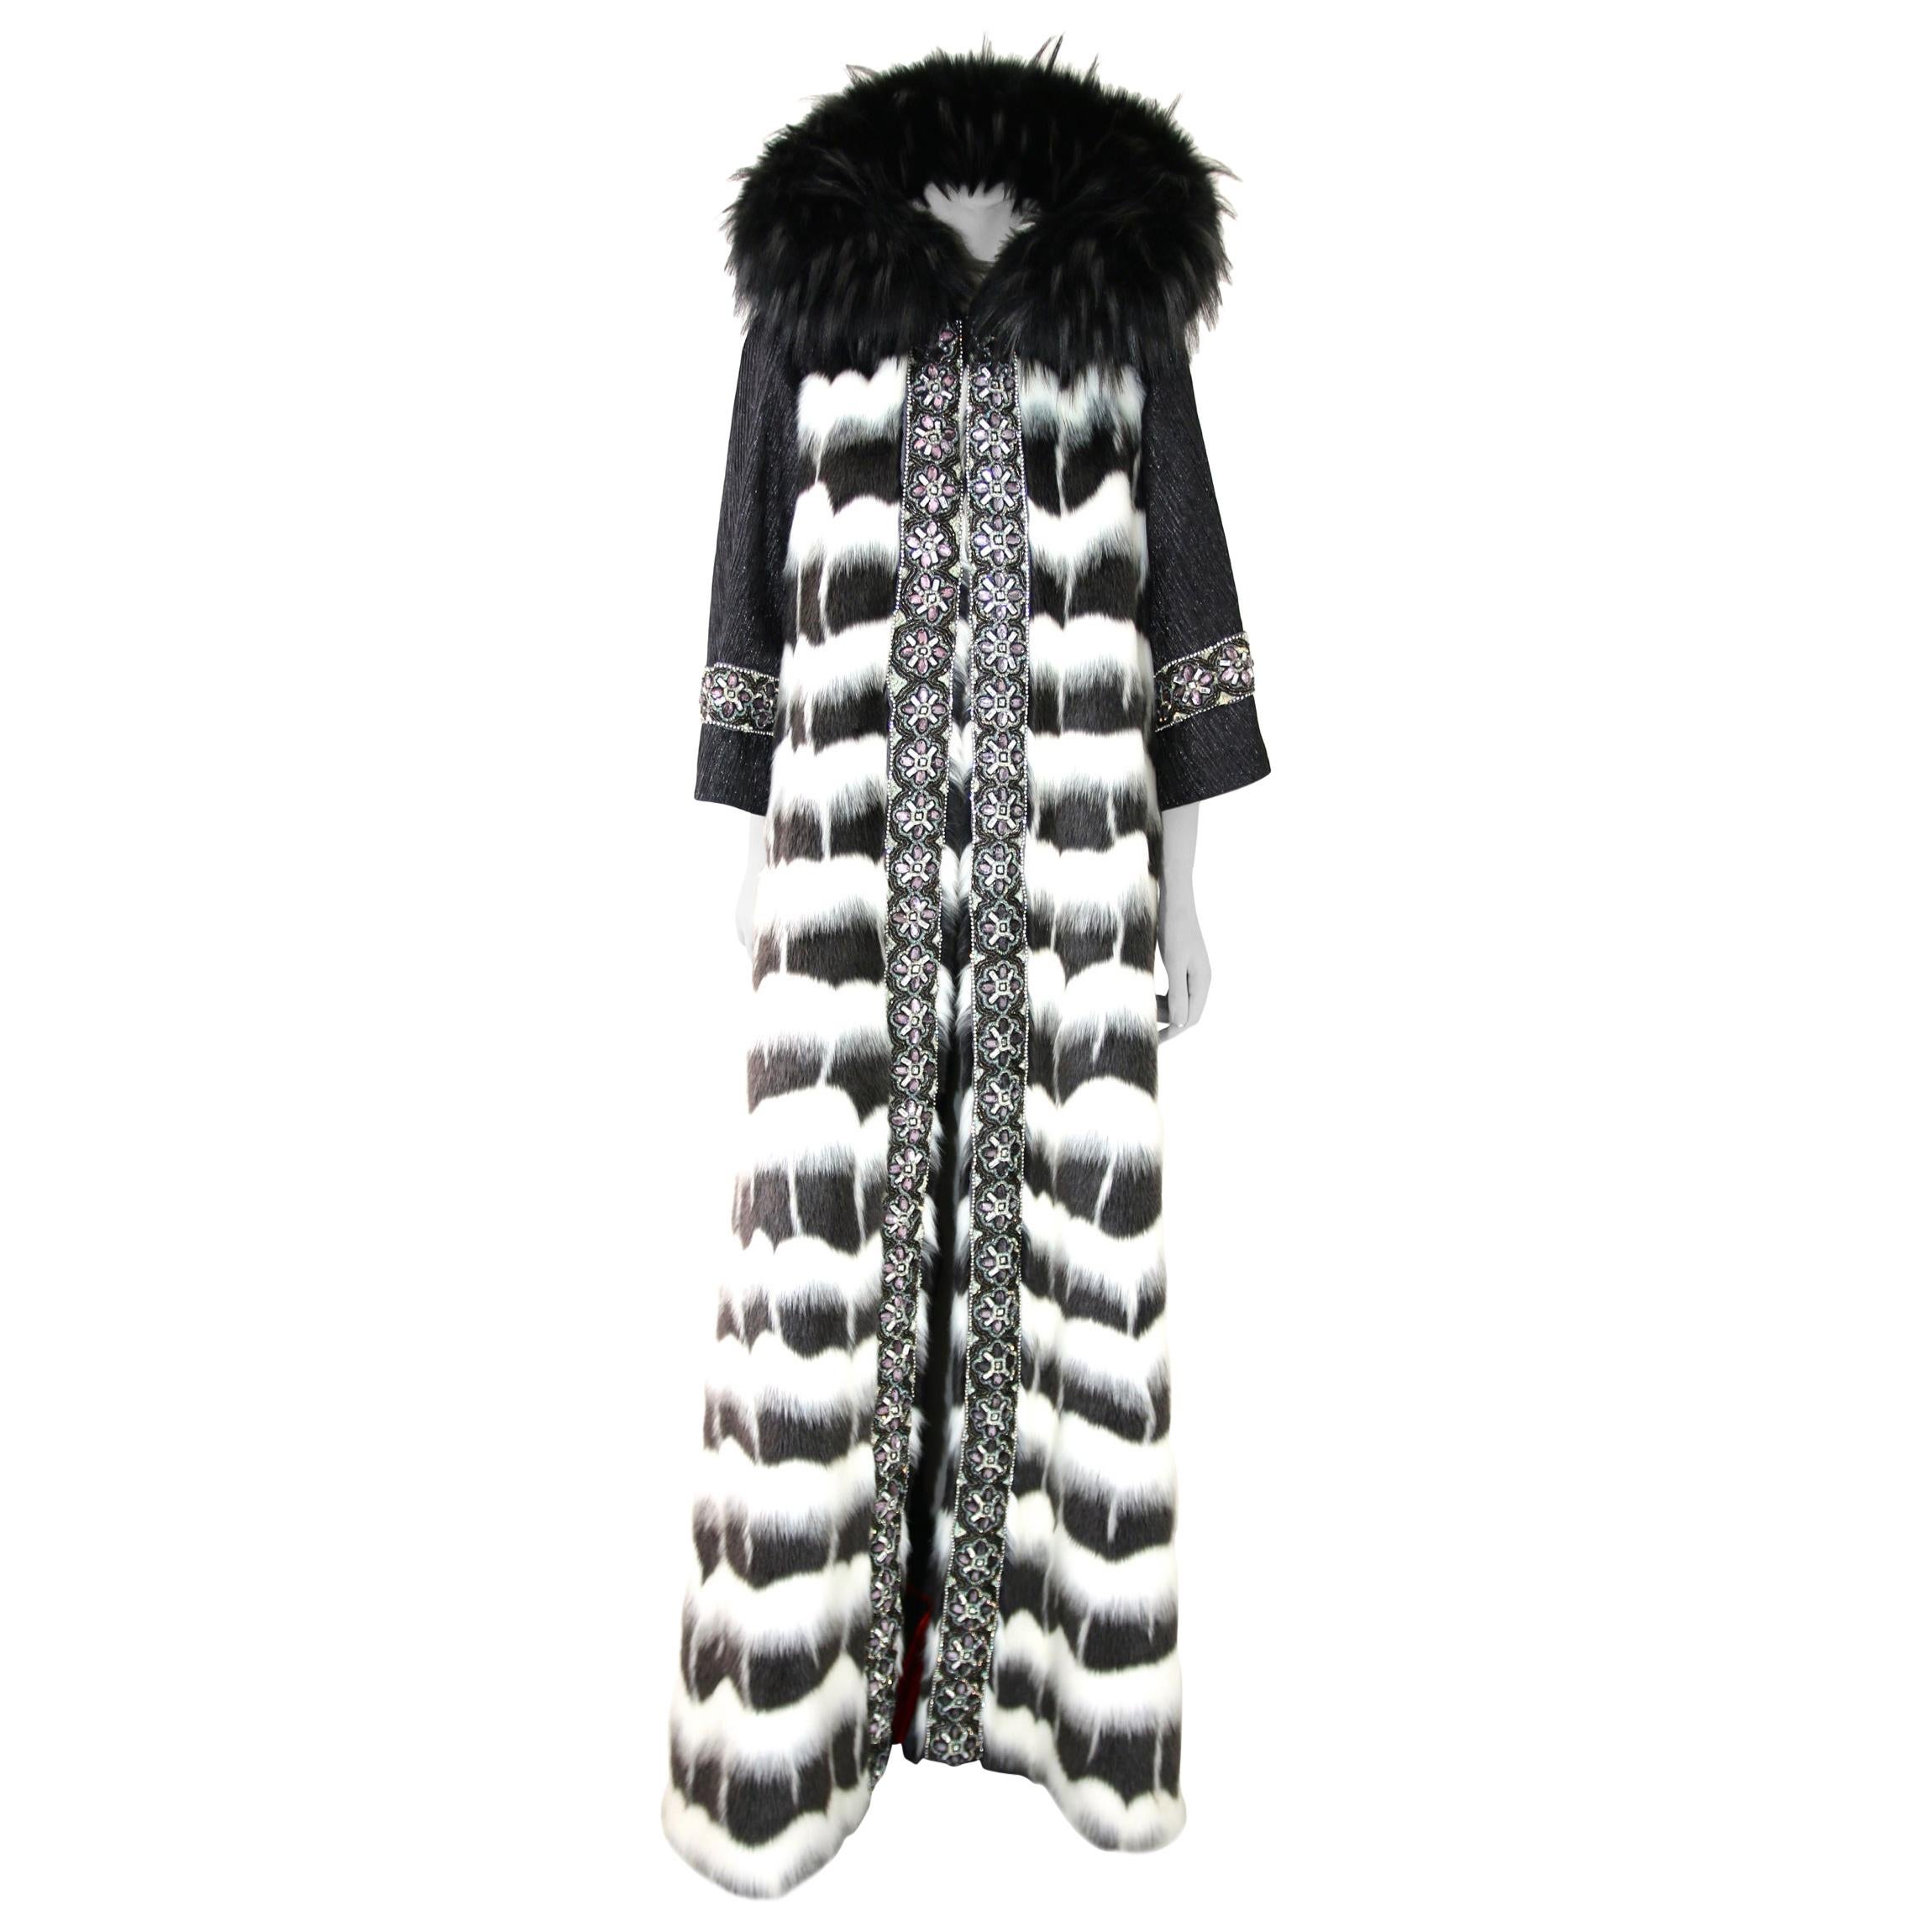 Pelush Black and White Faux Fur Caftan Coat Full-Length w/Hood - Small